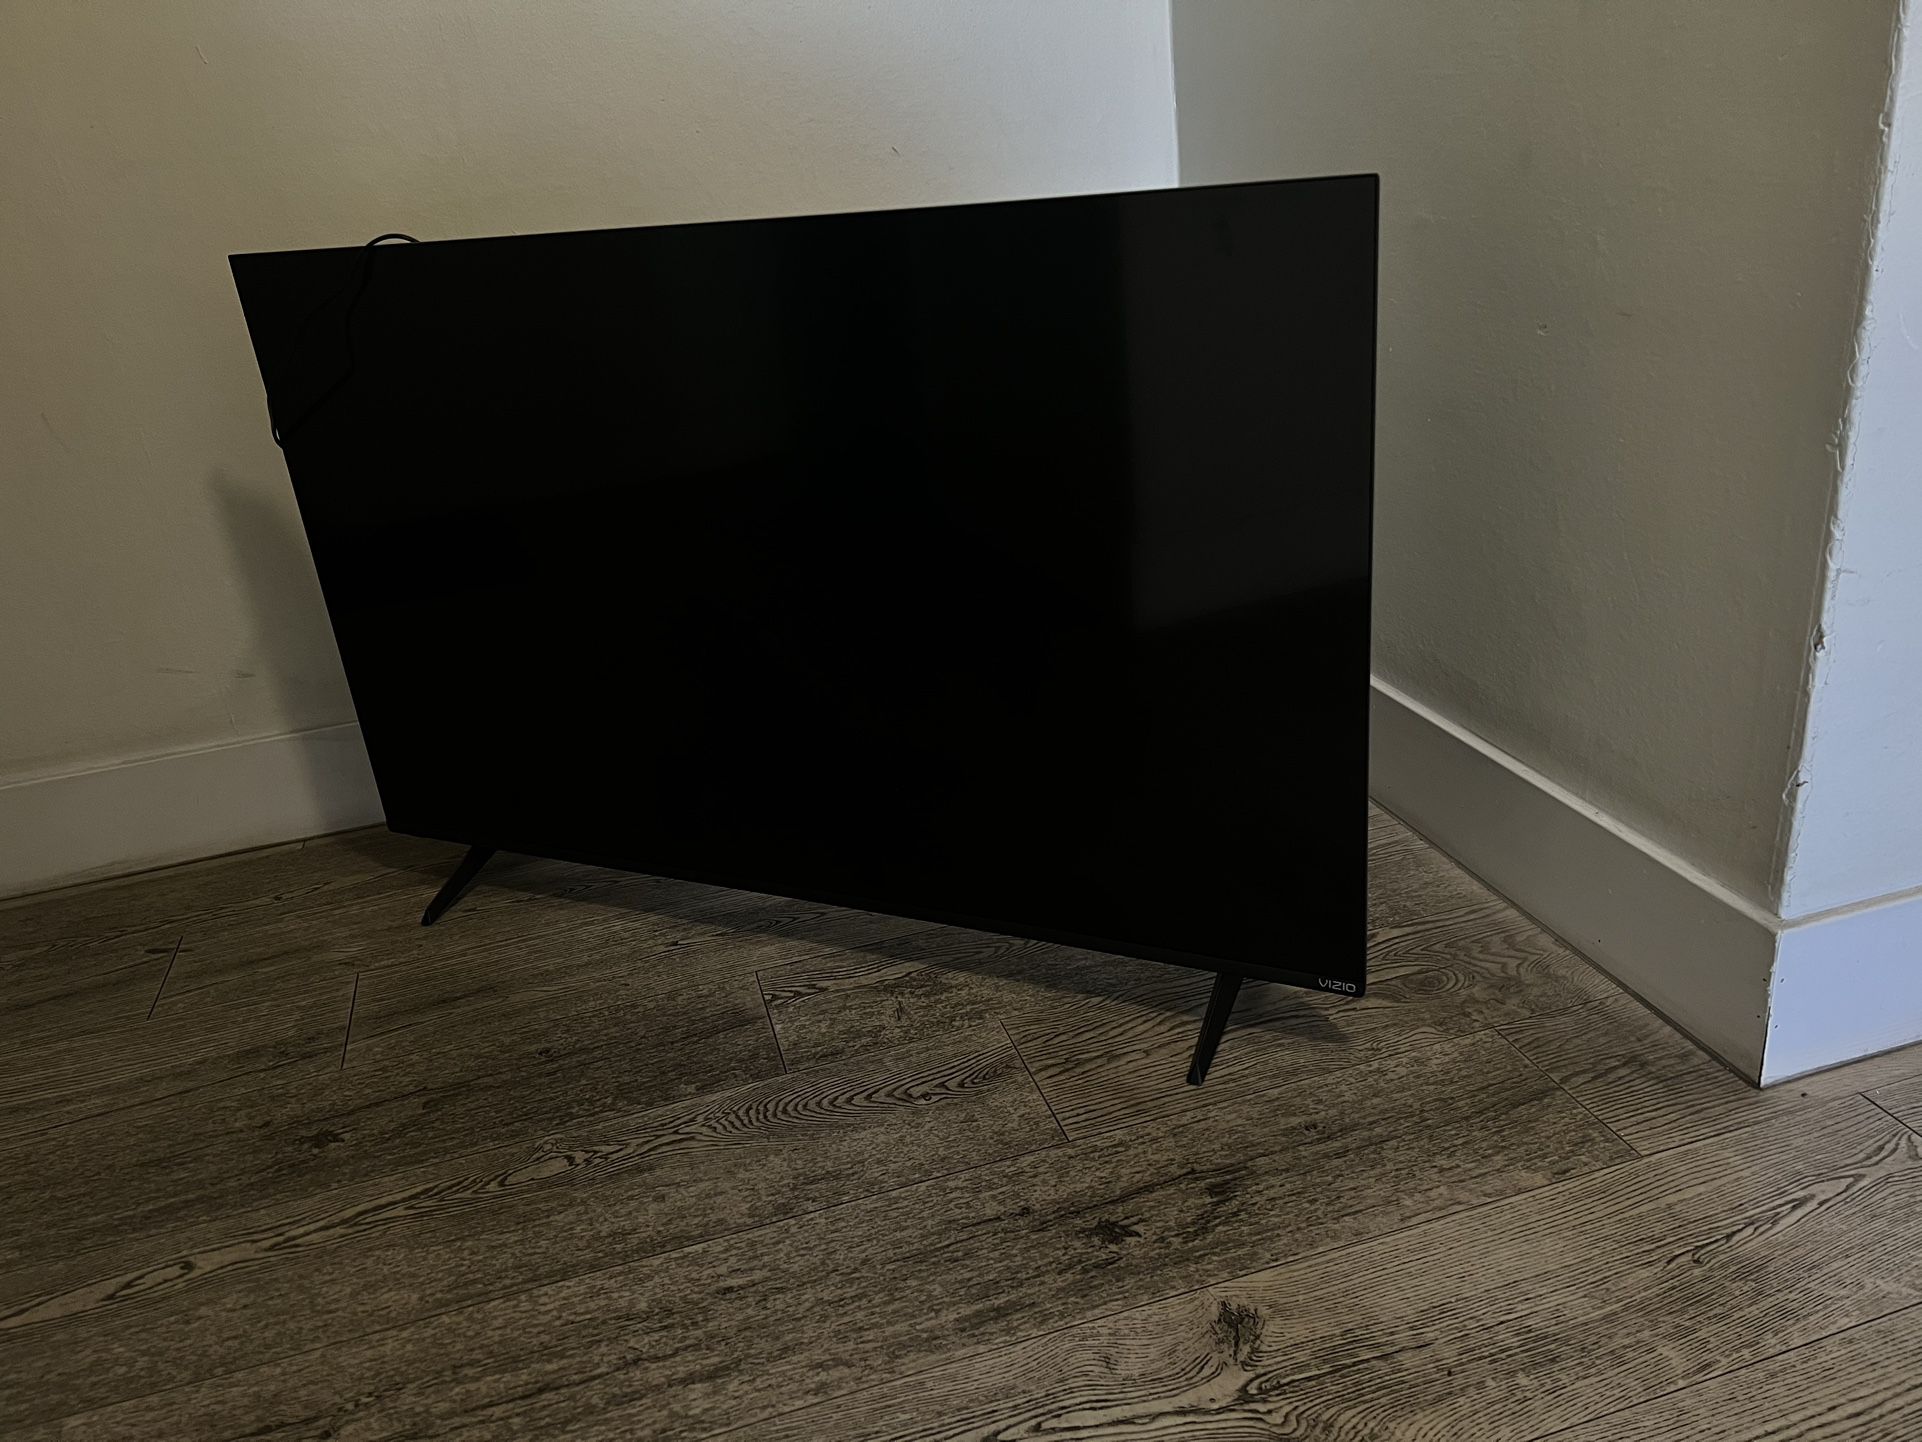 50” VIZIO Smart TV - Like New!